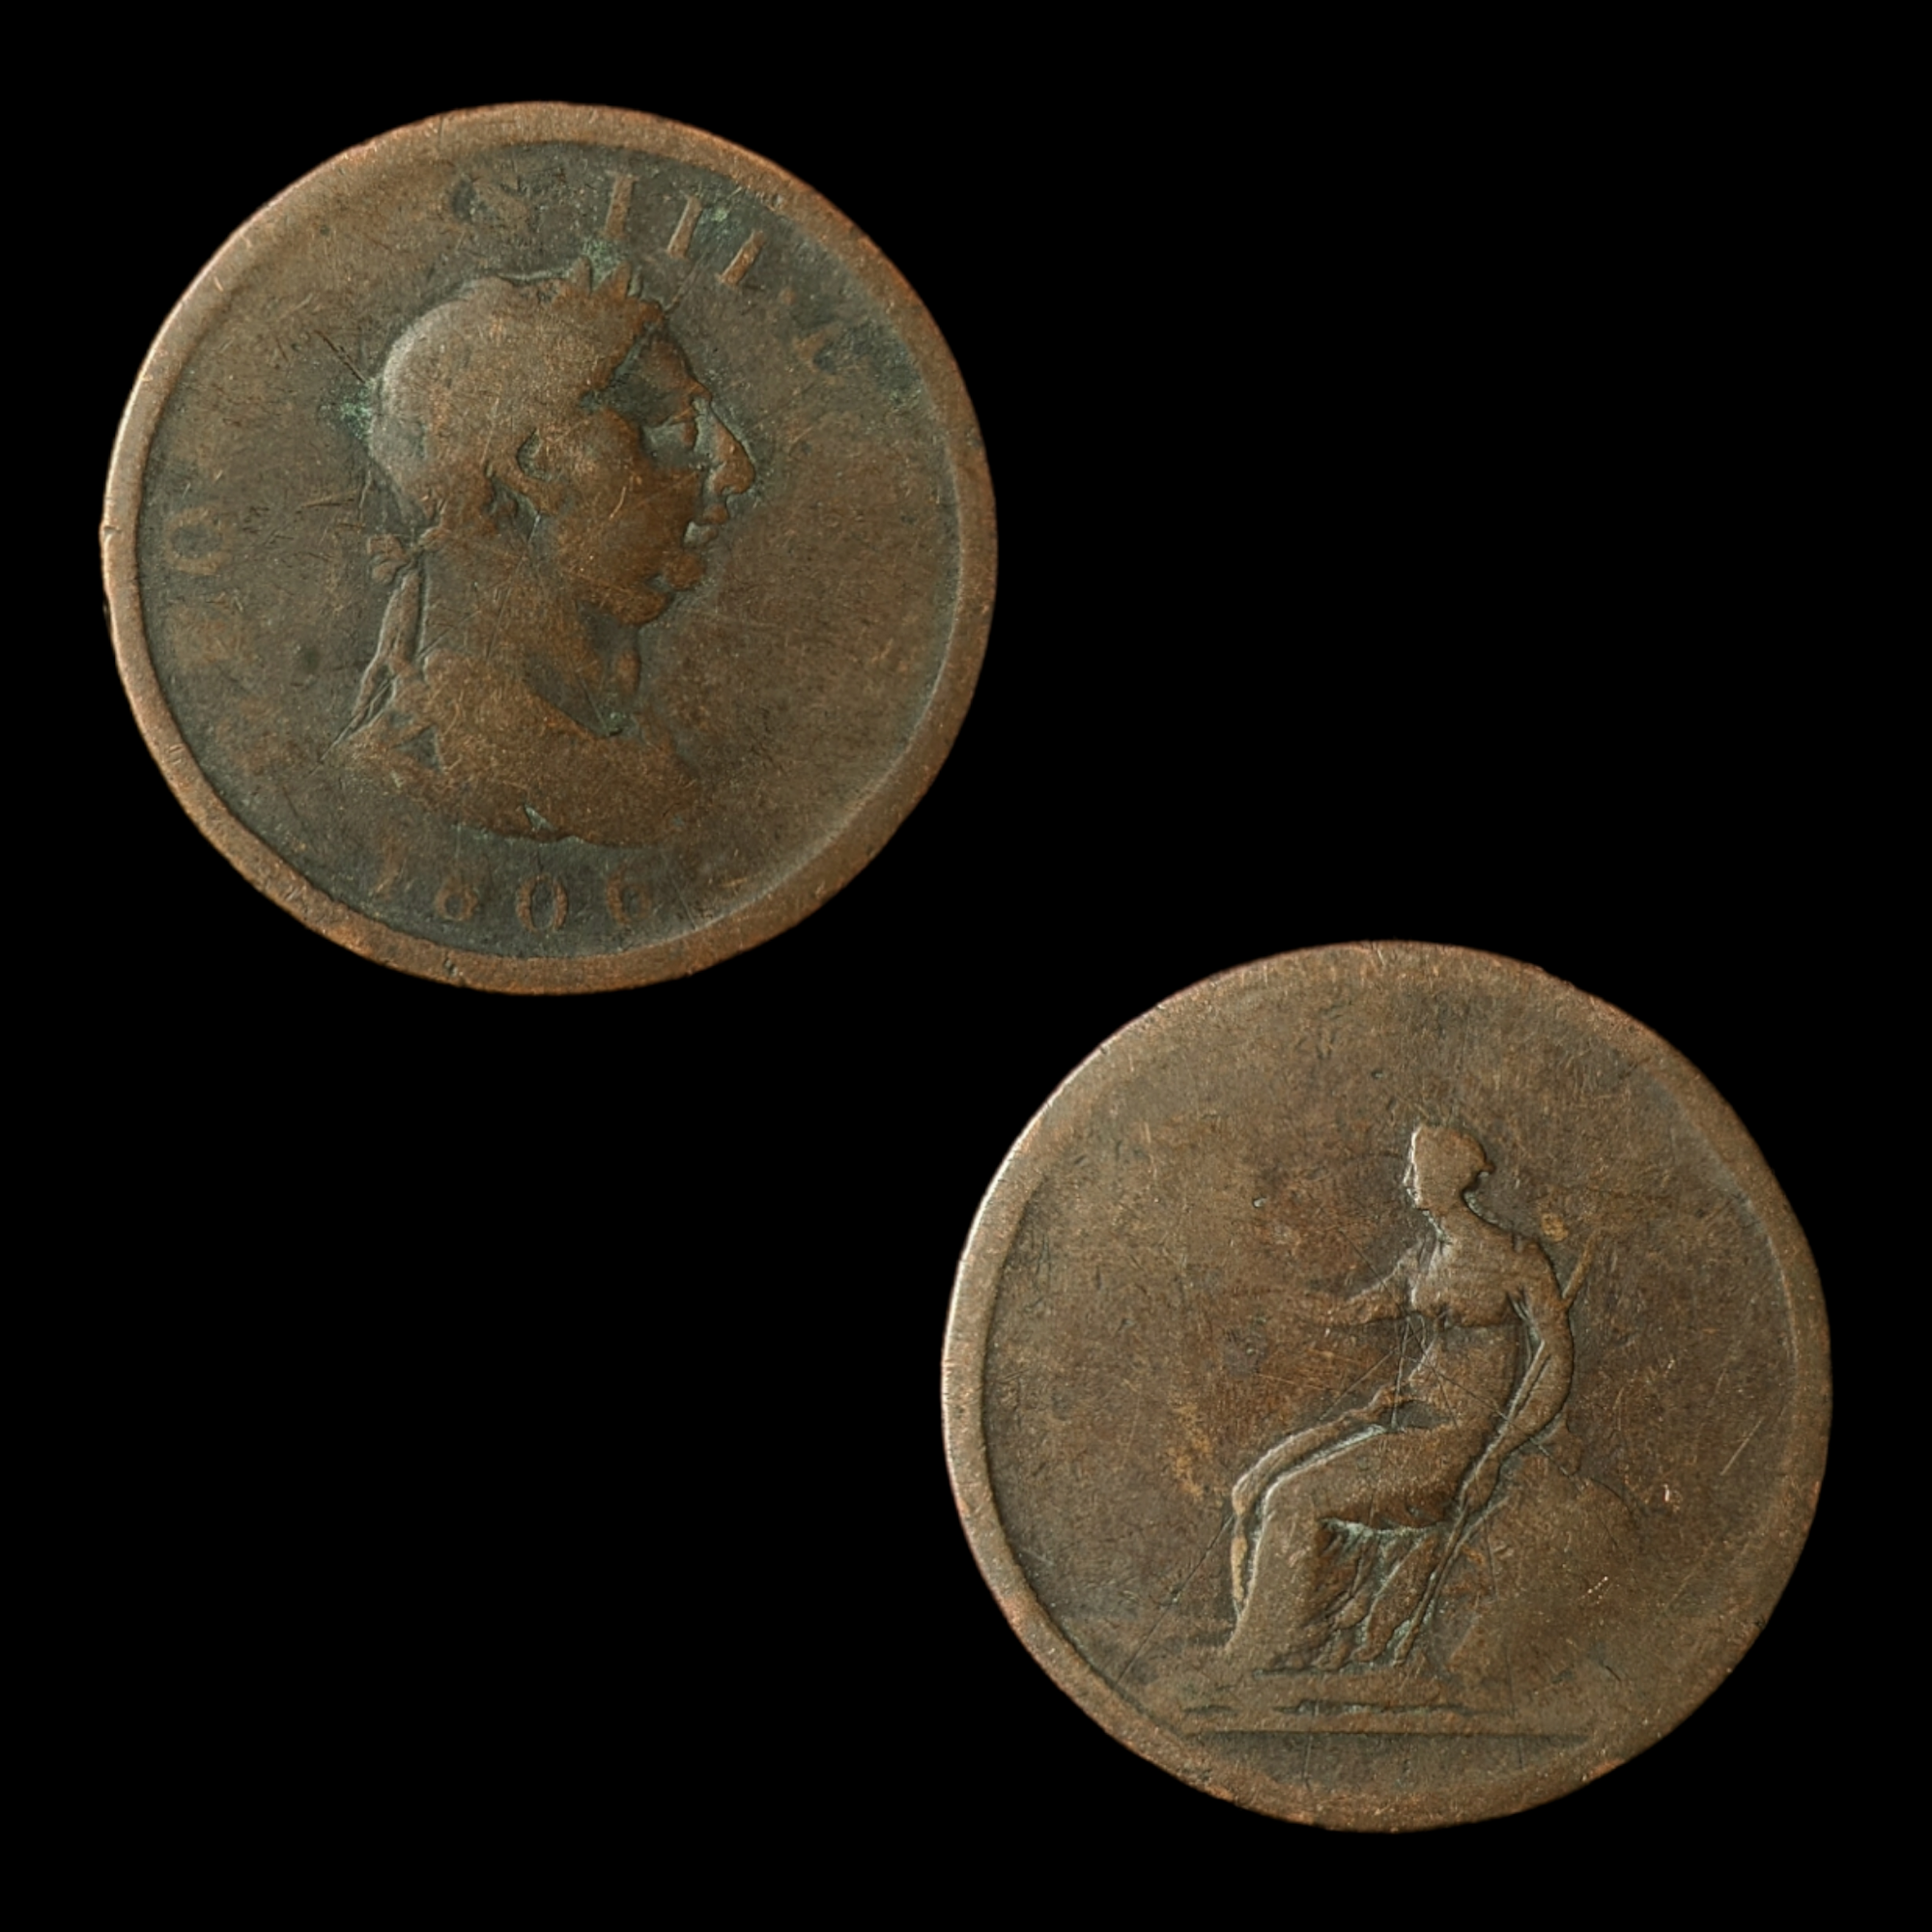 George III, Low Grade Penny - 1806 - Great Britain